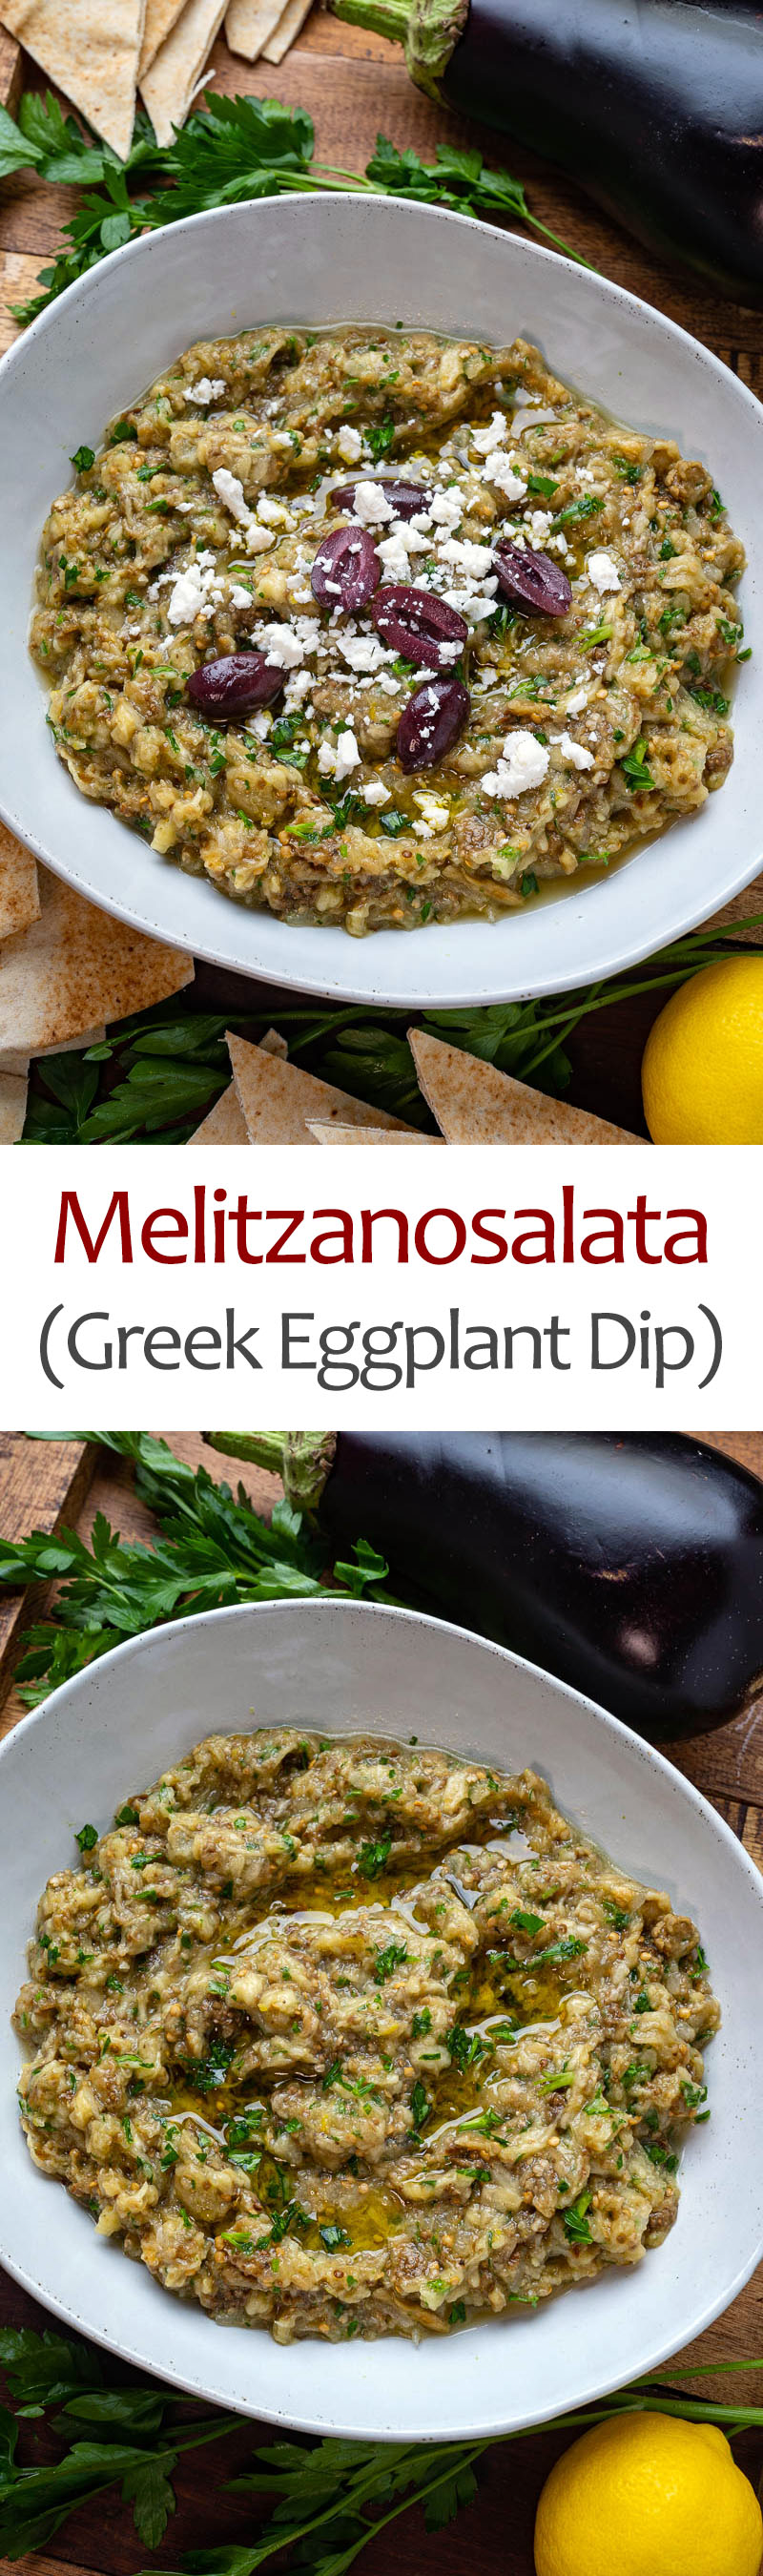 Melitzanosalata (Greek Eggplant Dip)